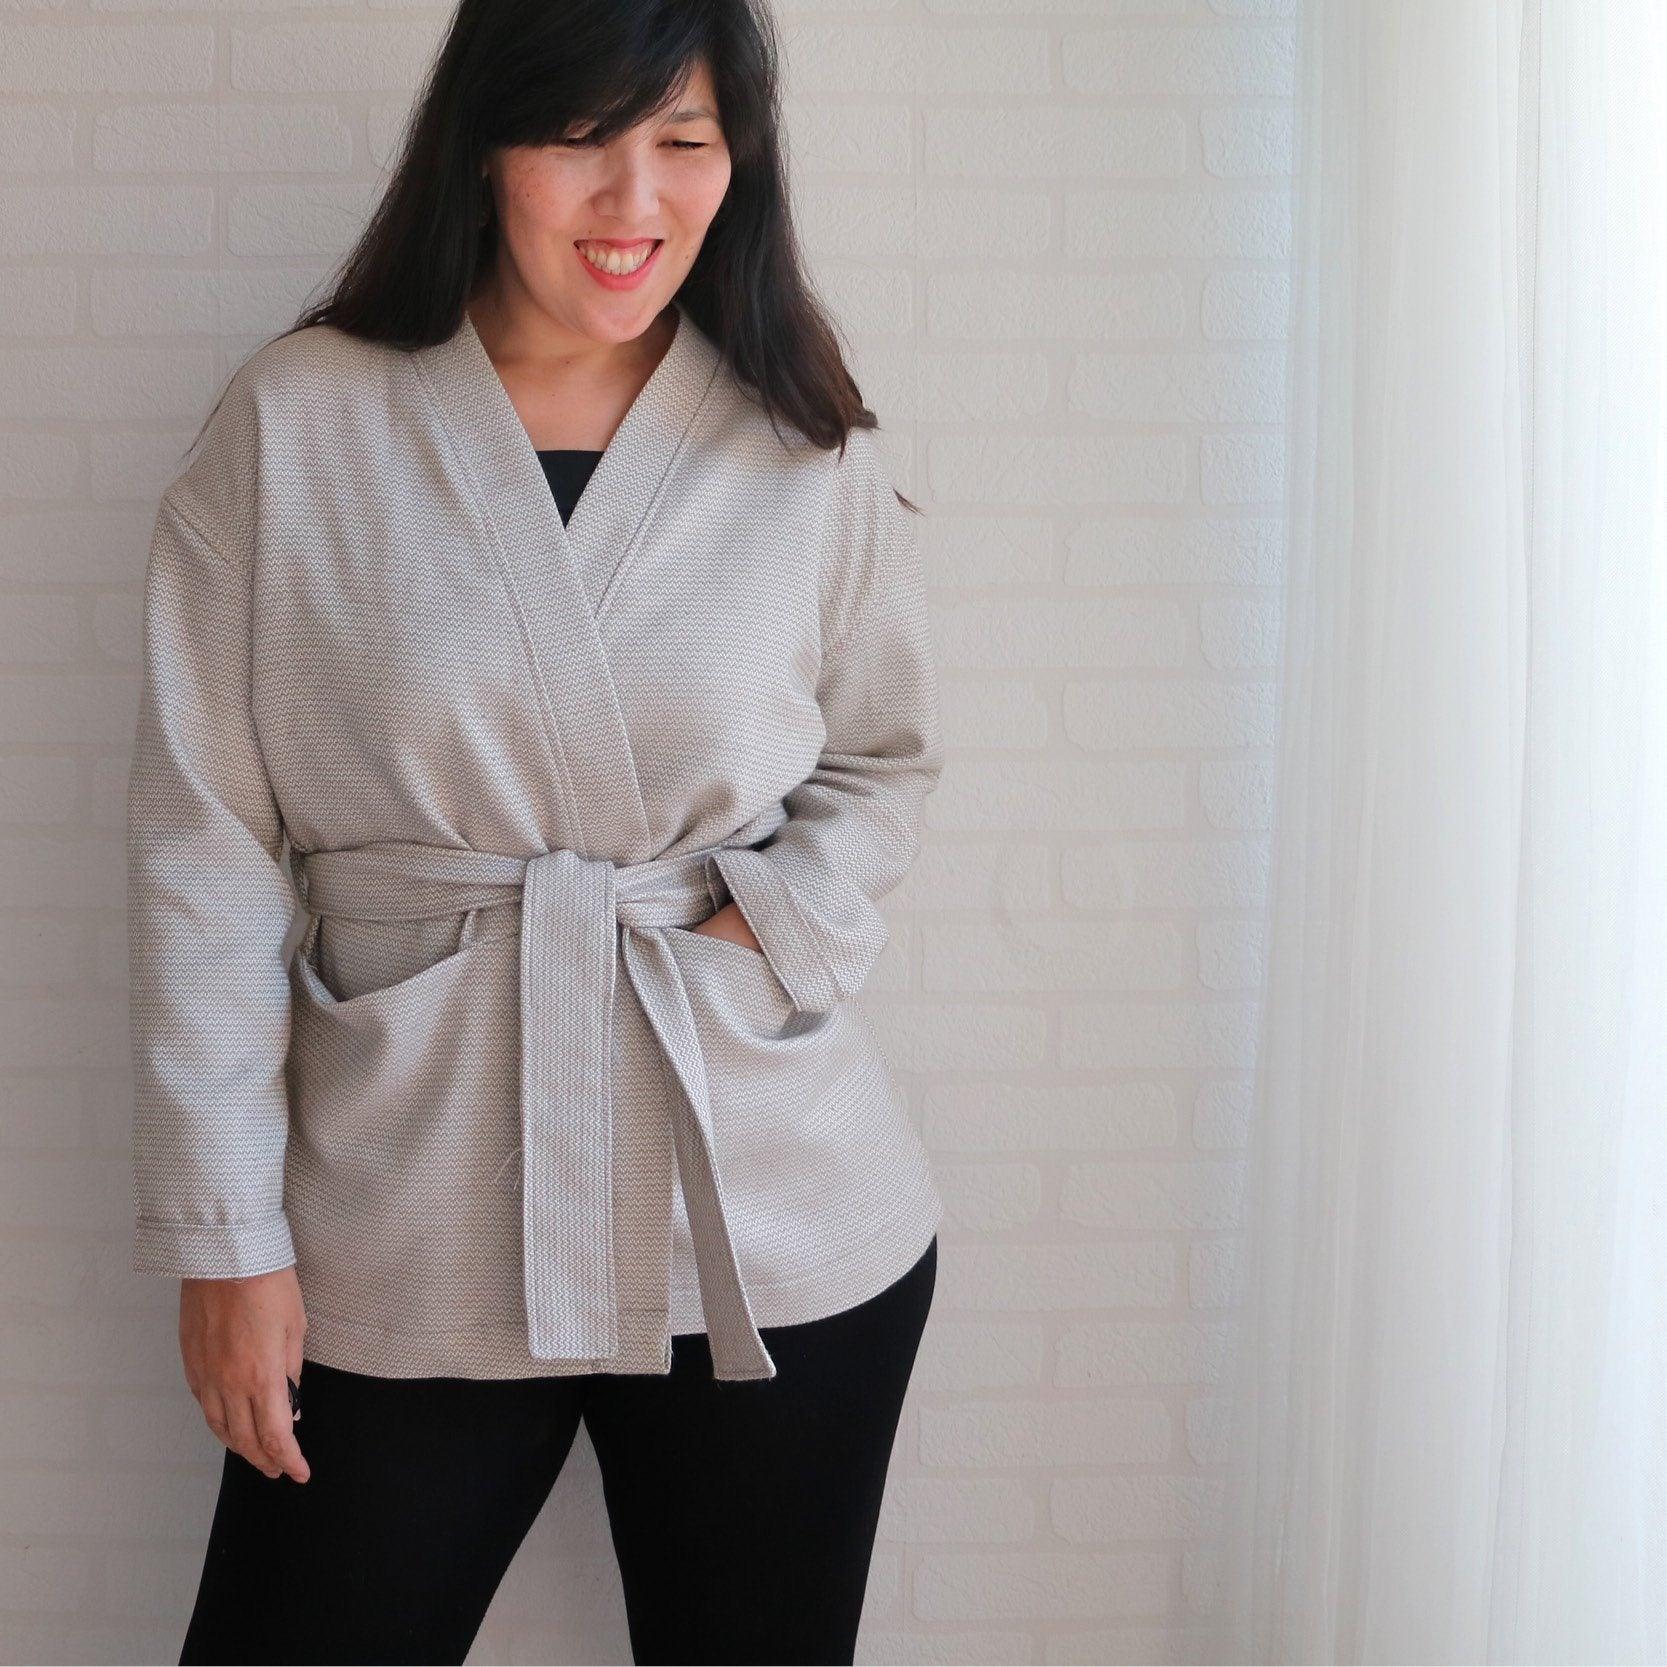 Komi Kimono Jacket by Wardrobe by Me